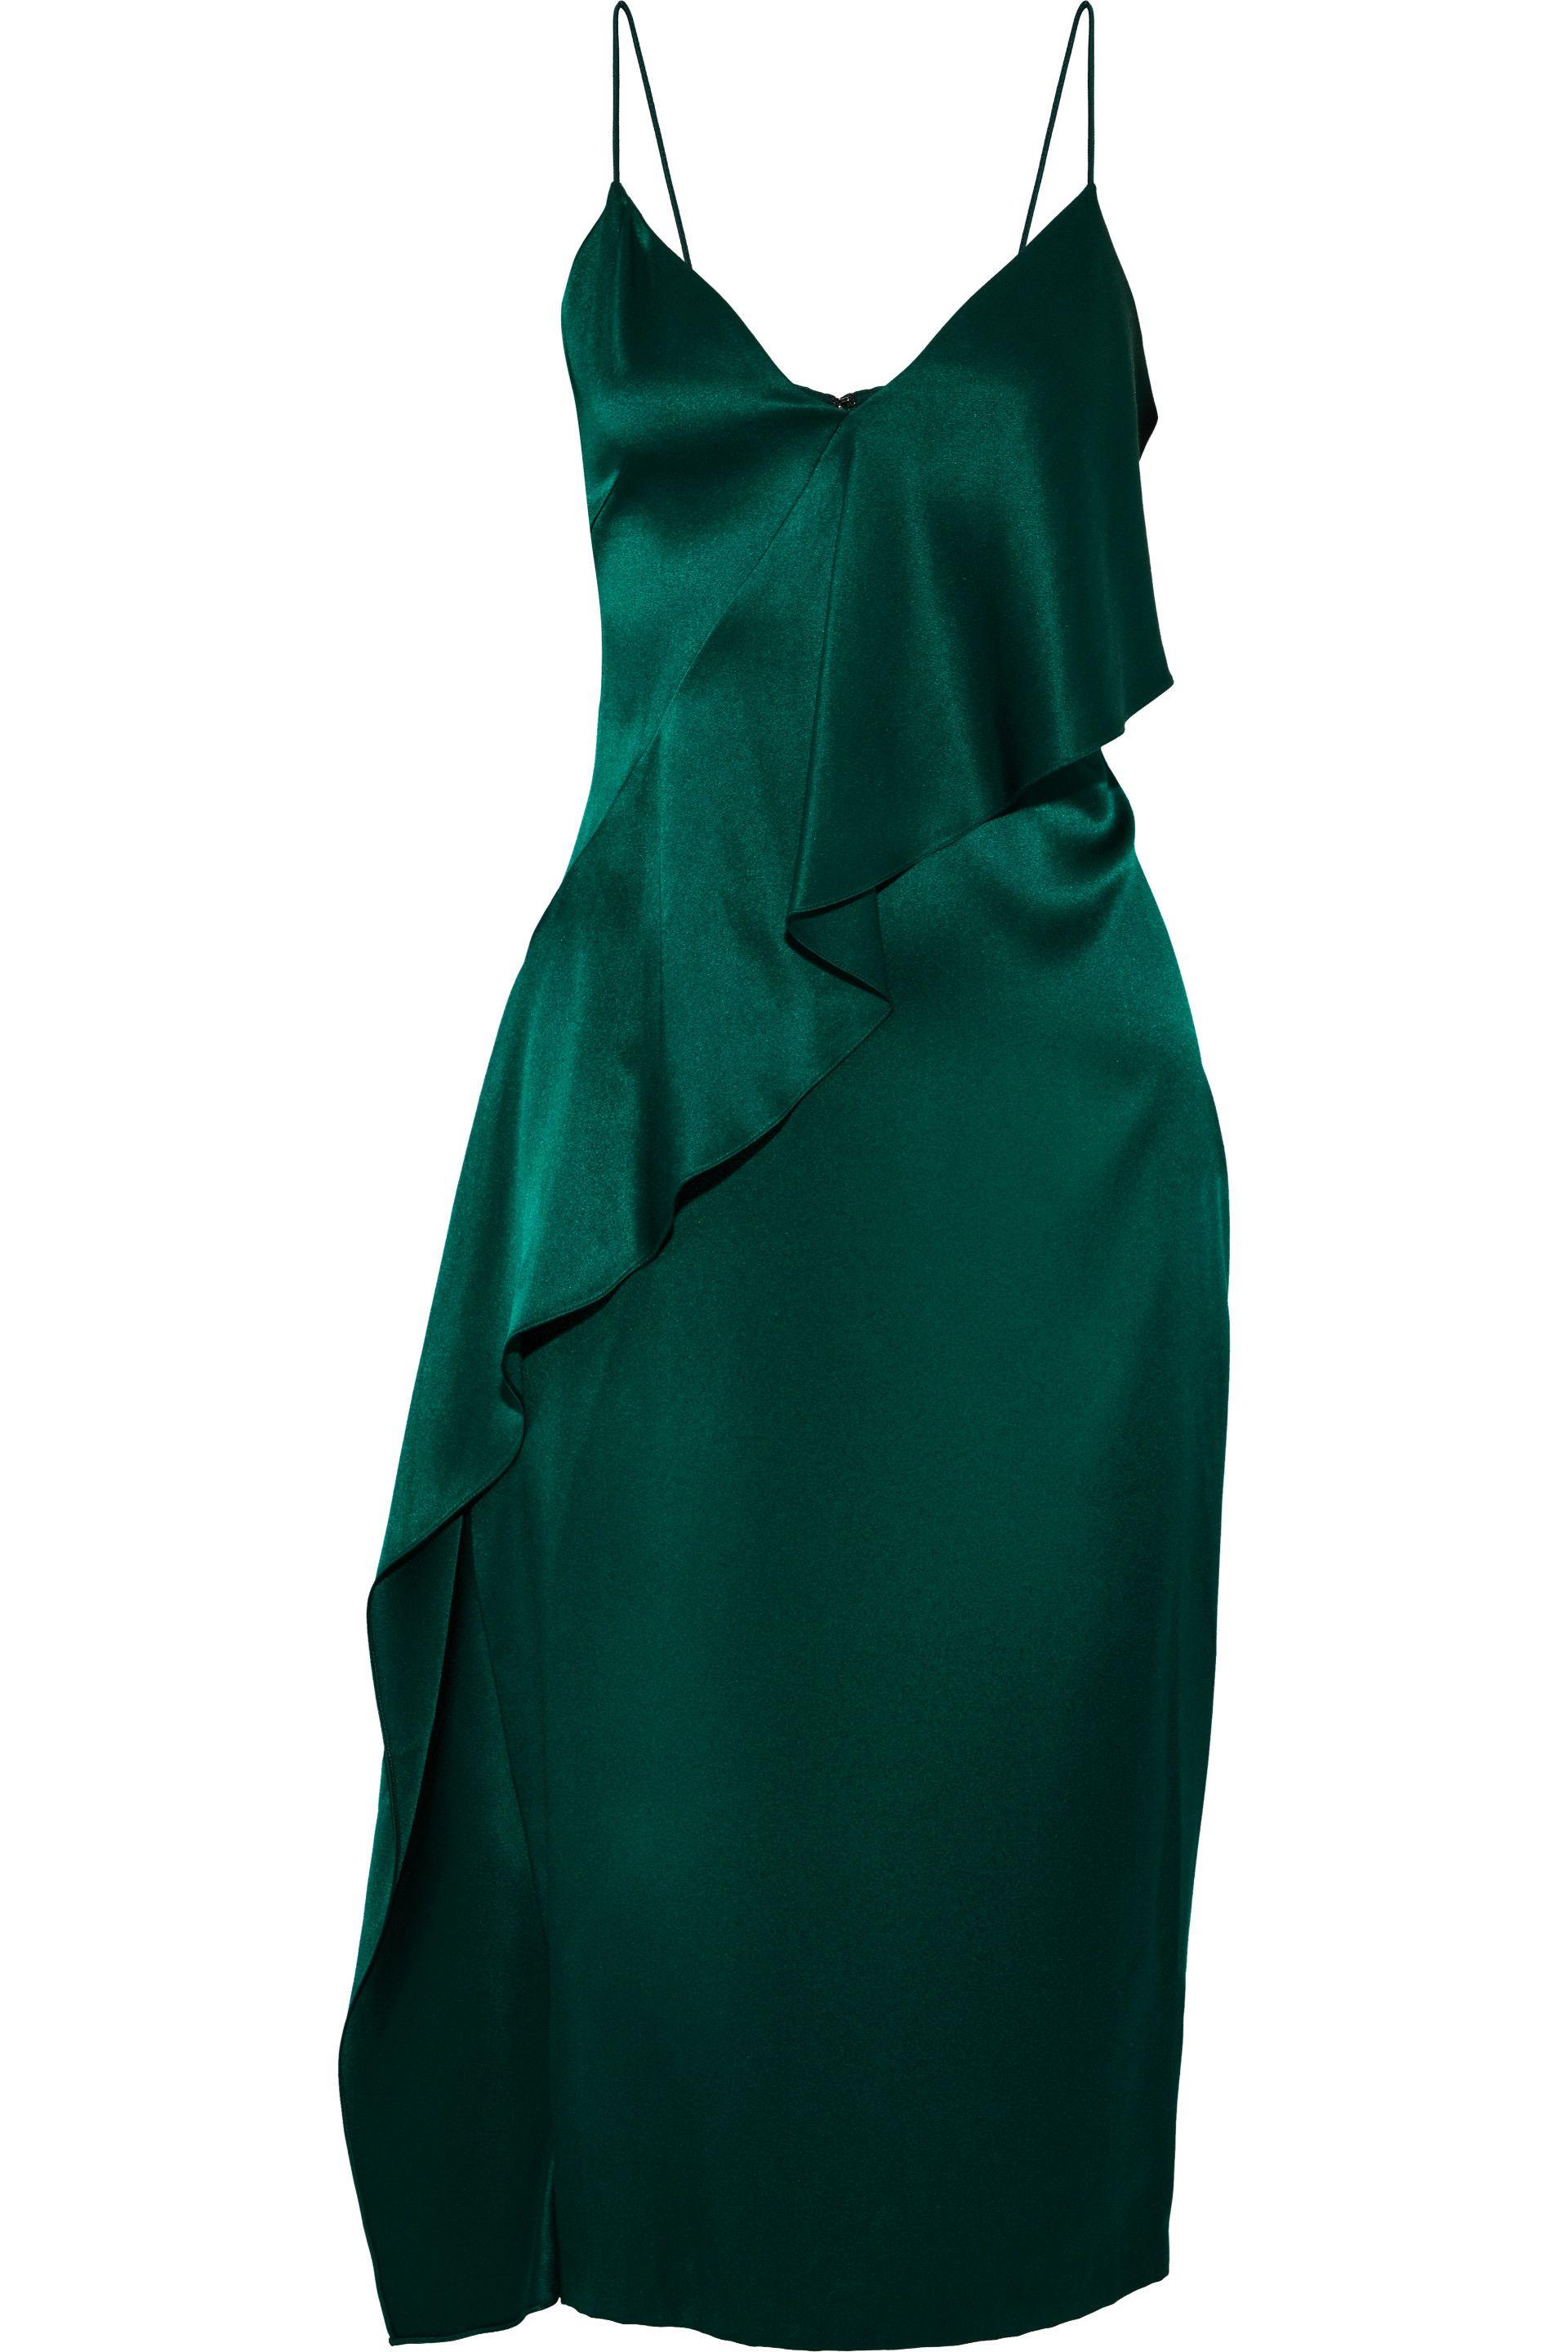 Cushnie Ruffled Silk-charmeuse Slip Dress Emerald in Green - Lyst